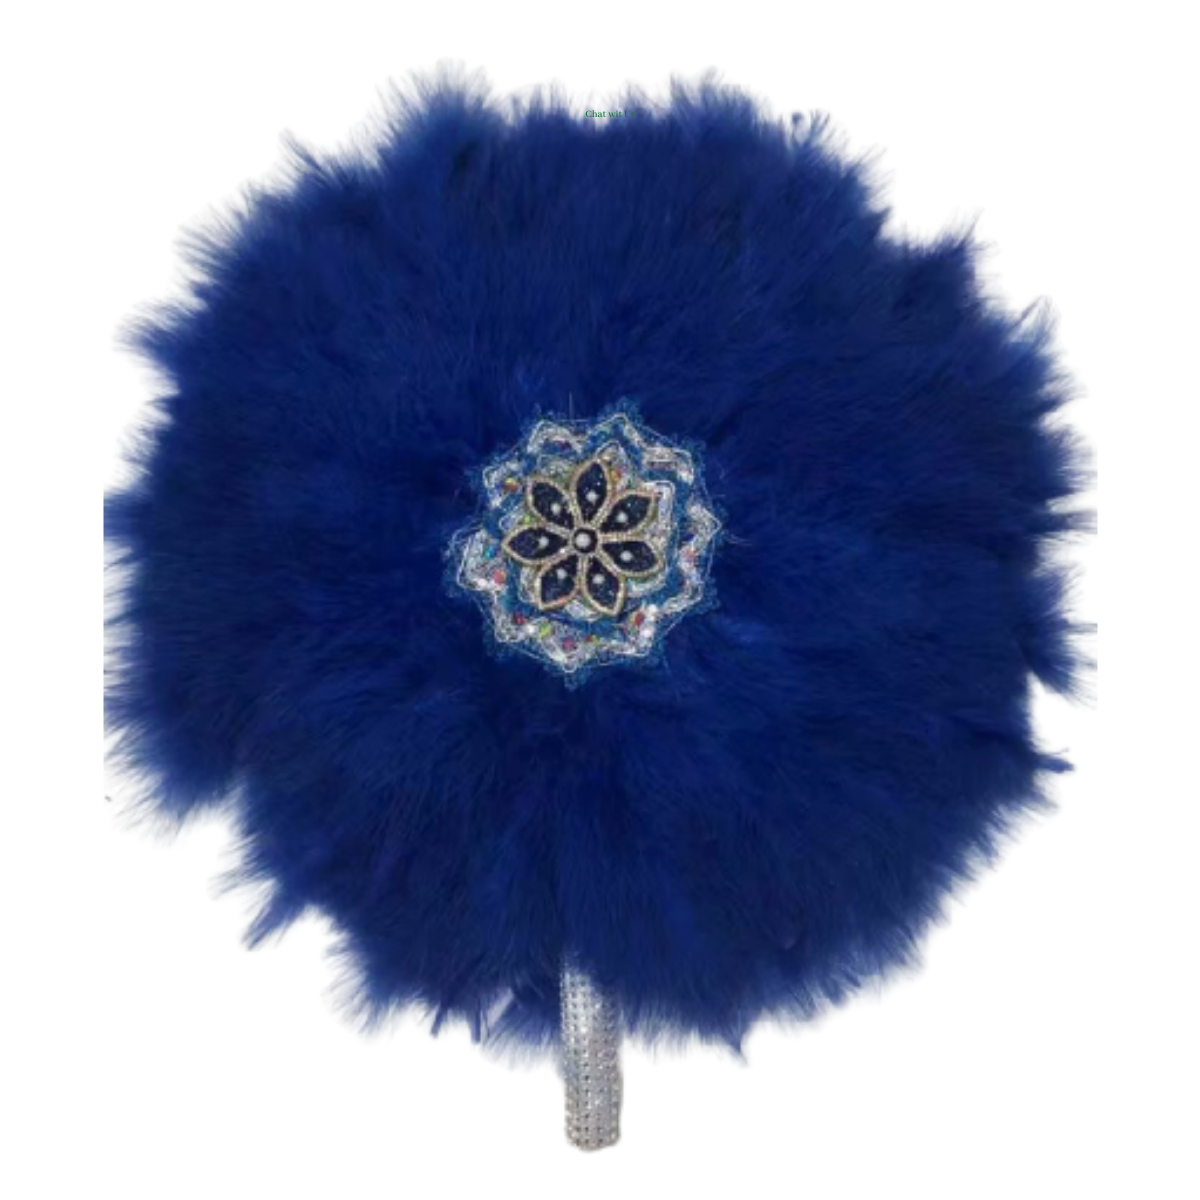 High-Quality Handmade Wedding Feather Hand Fan #6 - Alagema Fabrics & Accessories